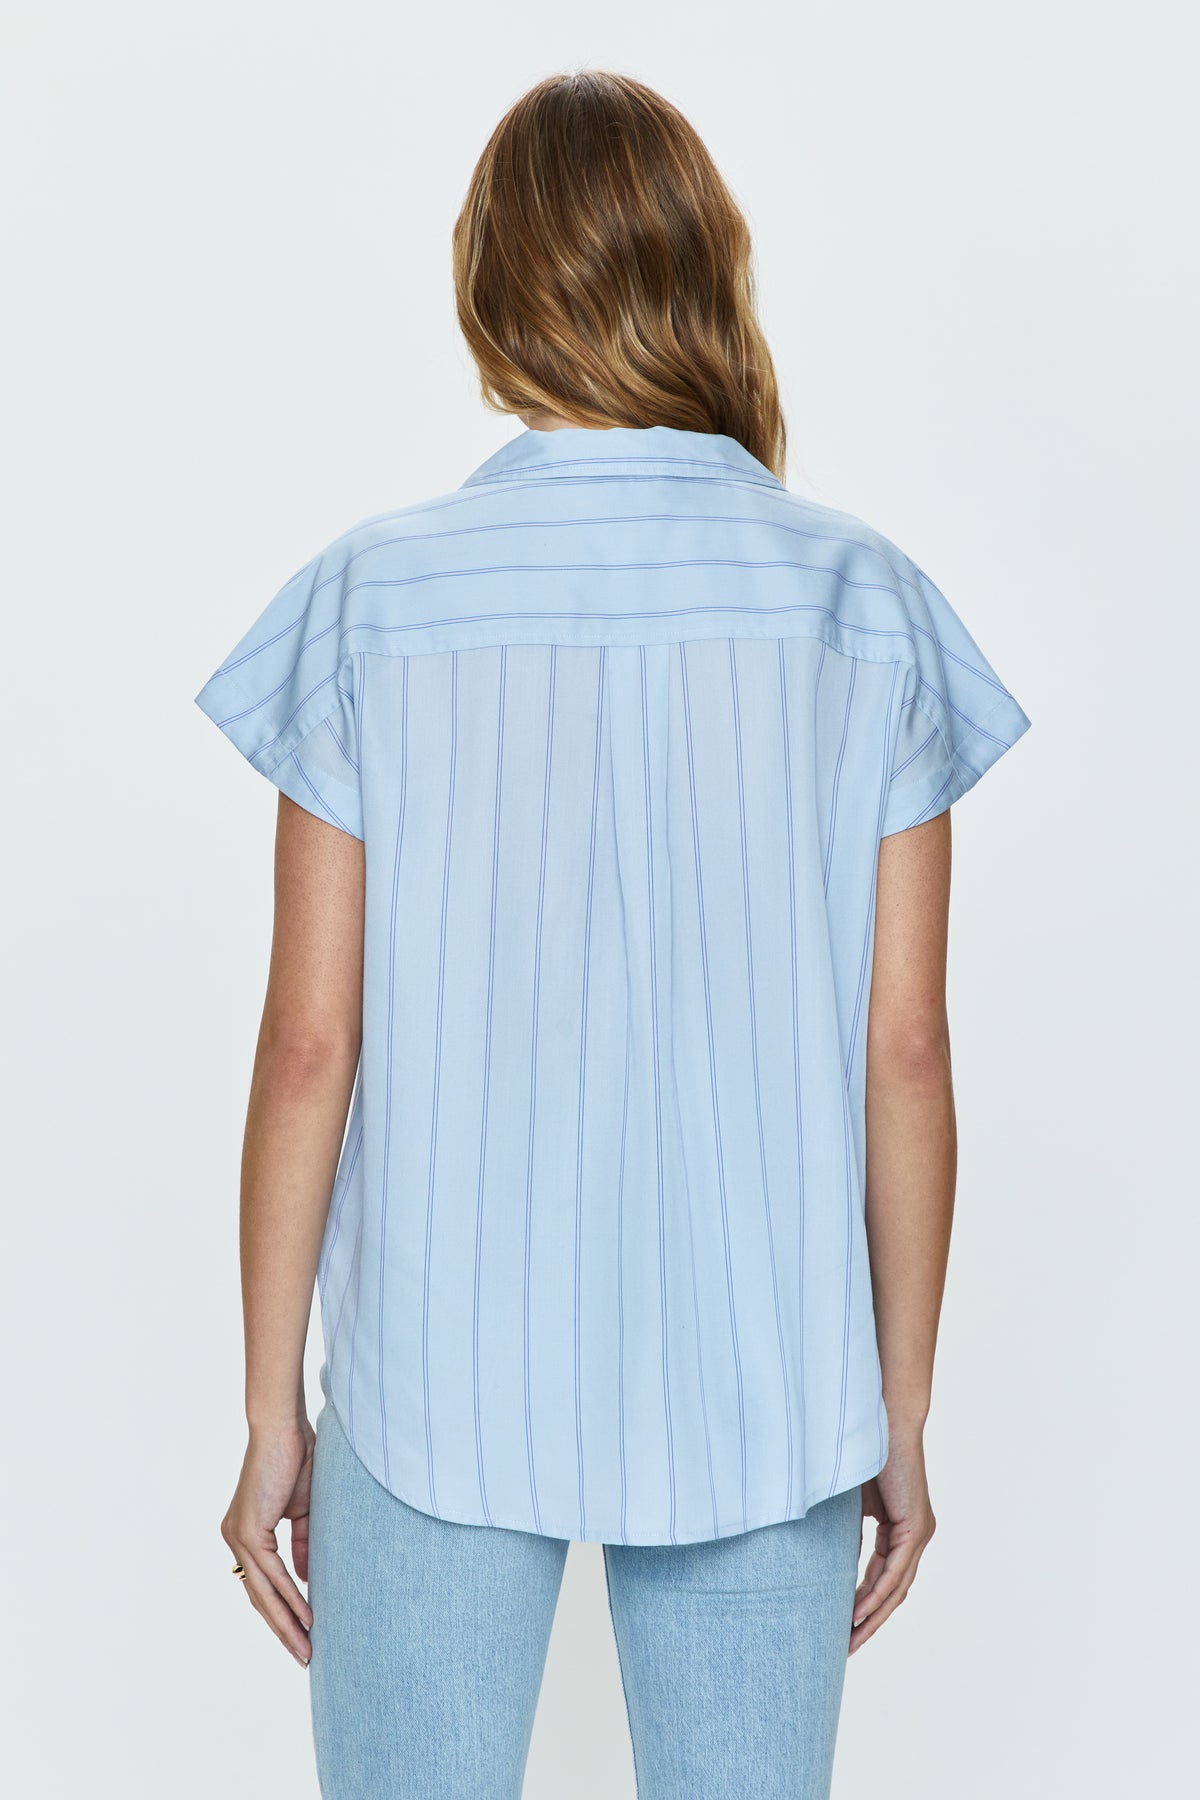 Sabine Shirt - Sky Wide Stripe